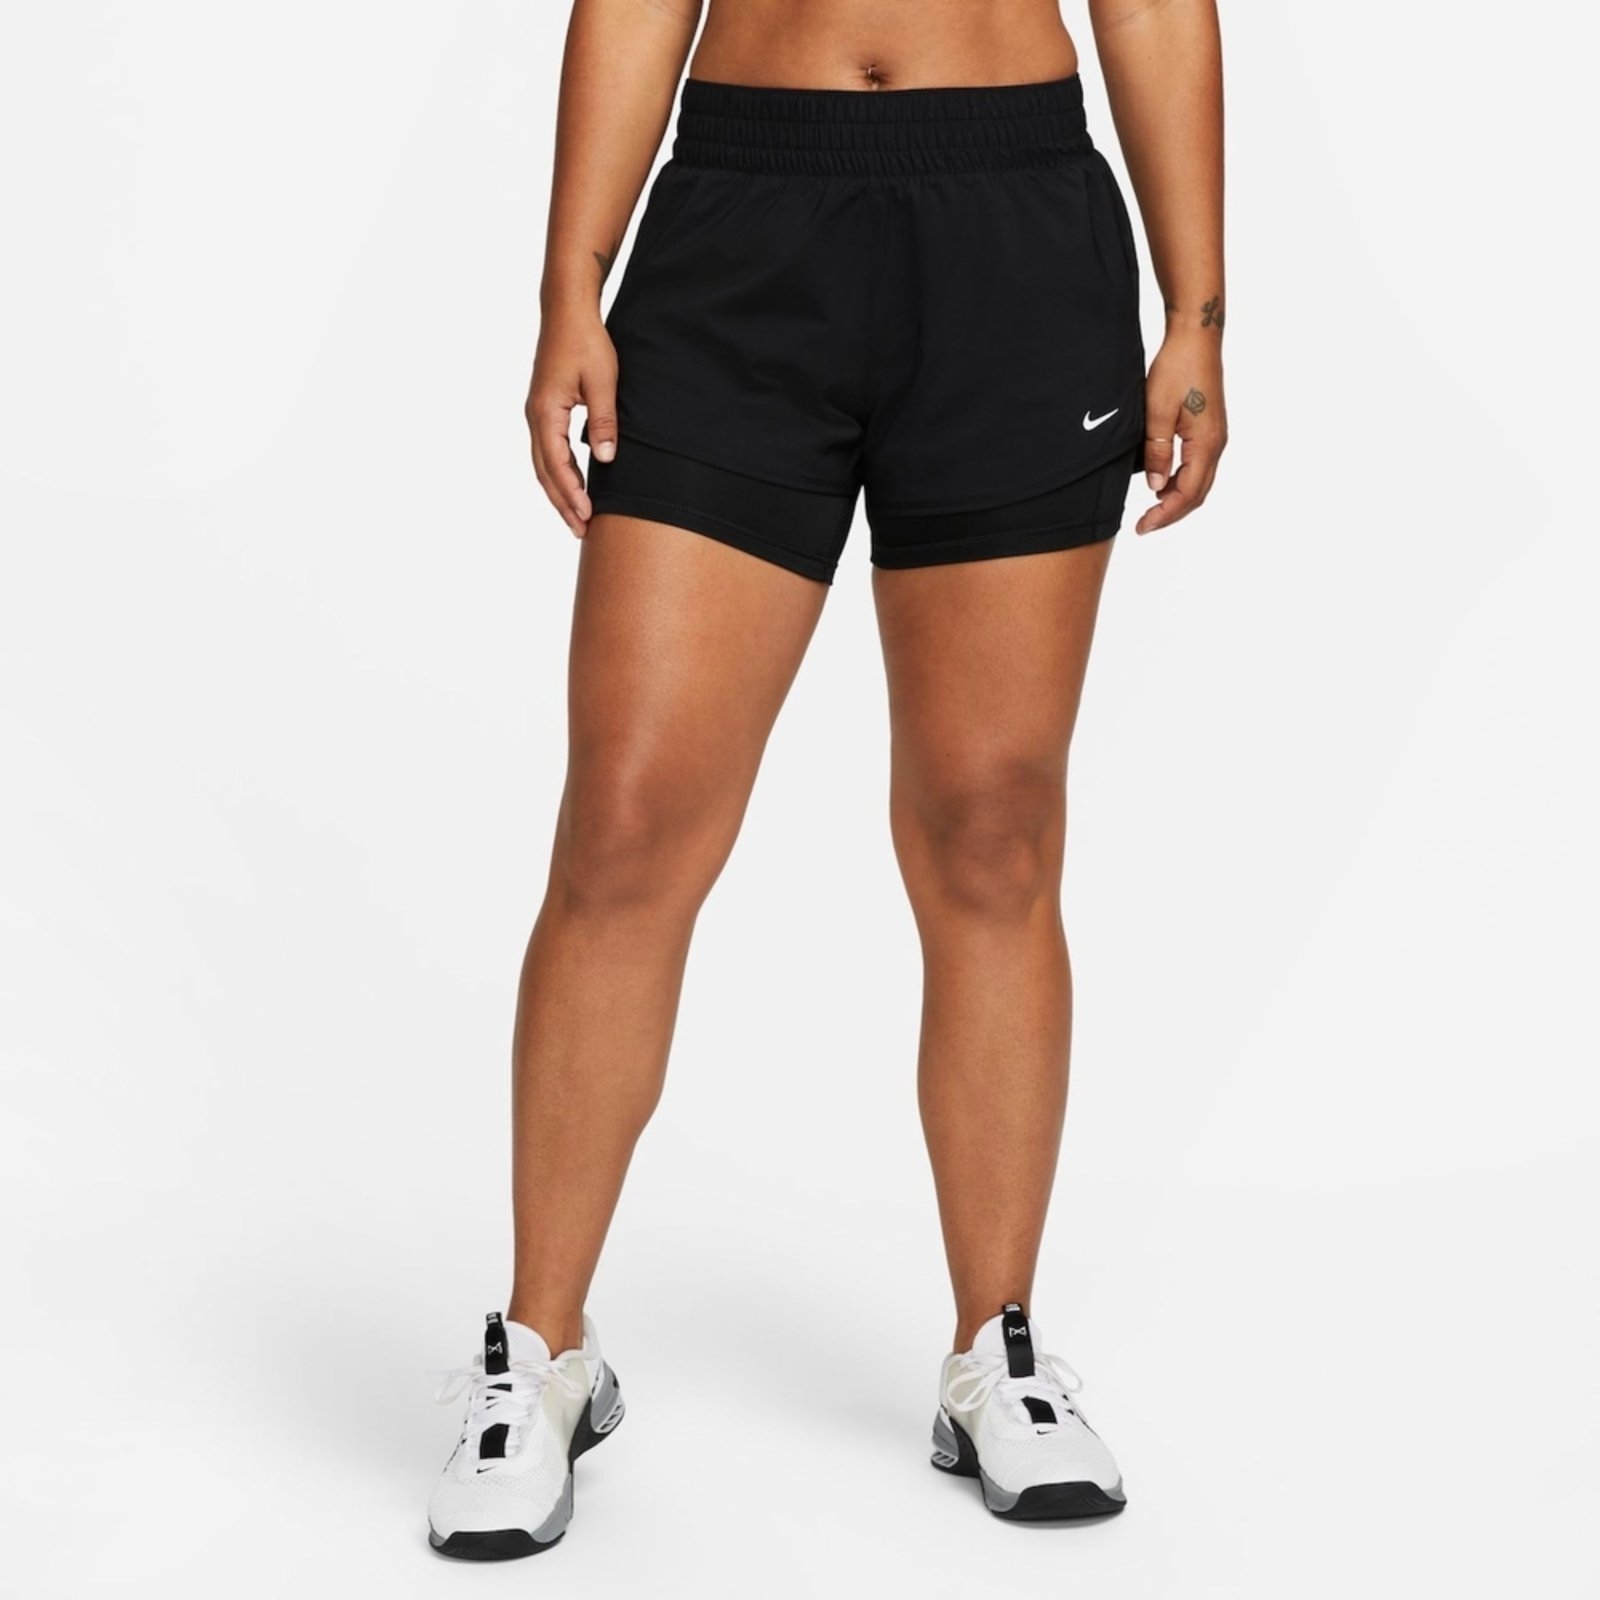 Shorts Nike Sportswear Essential 2 In 1 Feminino - Compre Agora